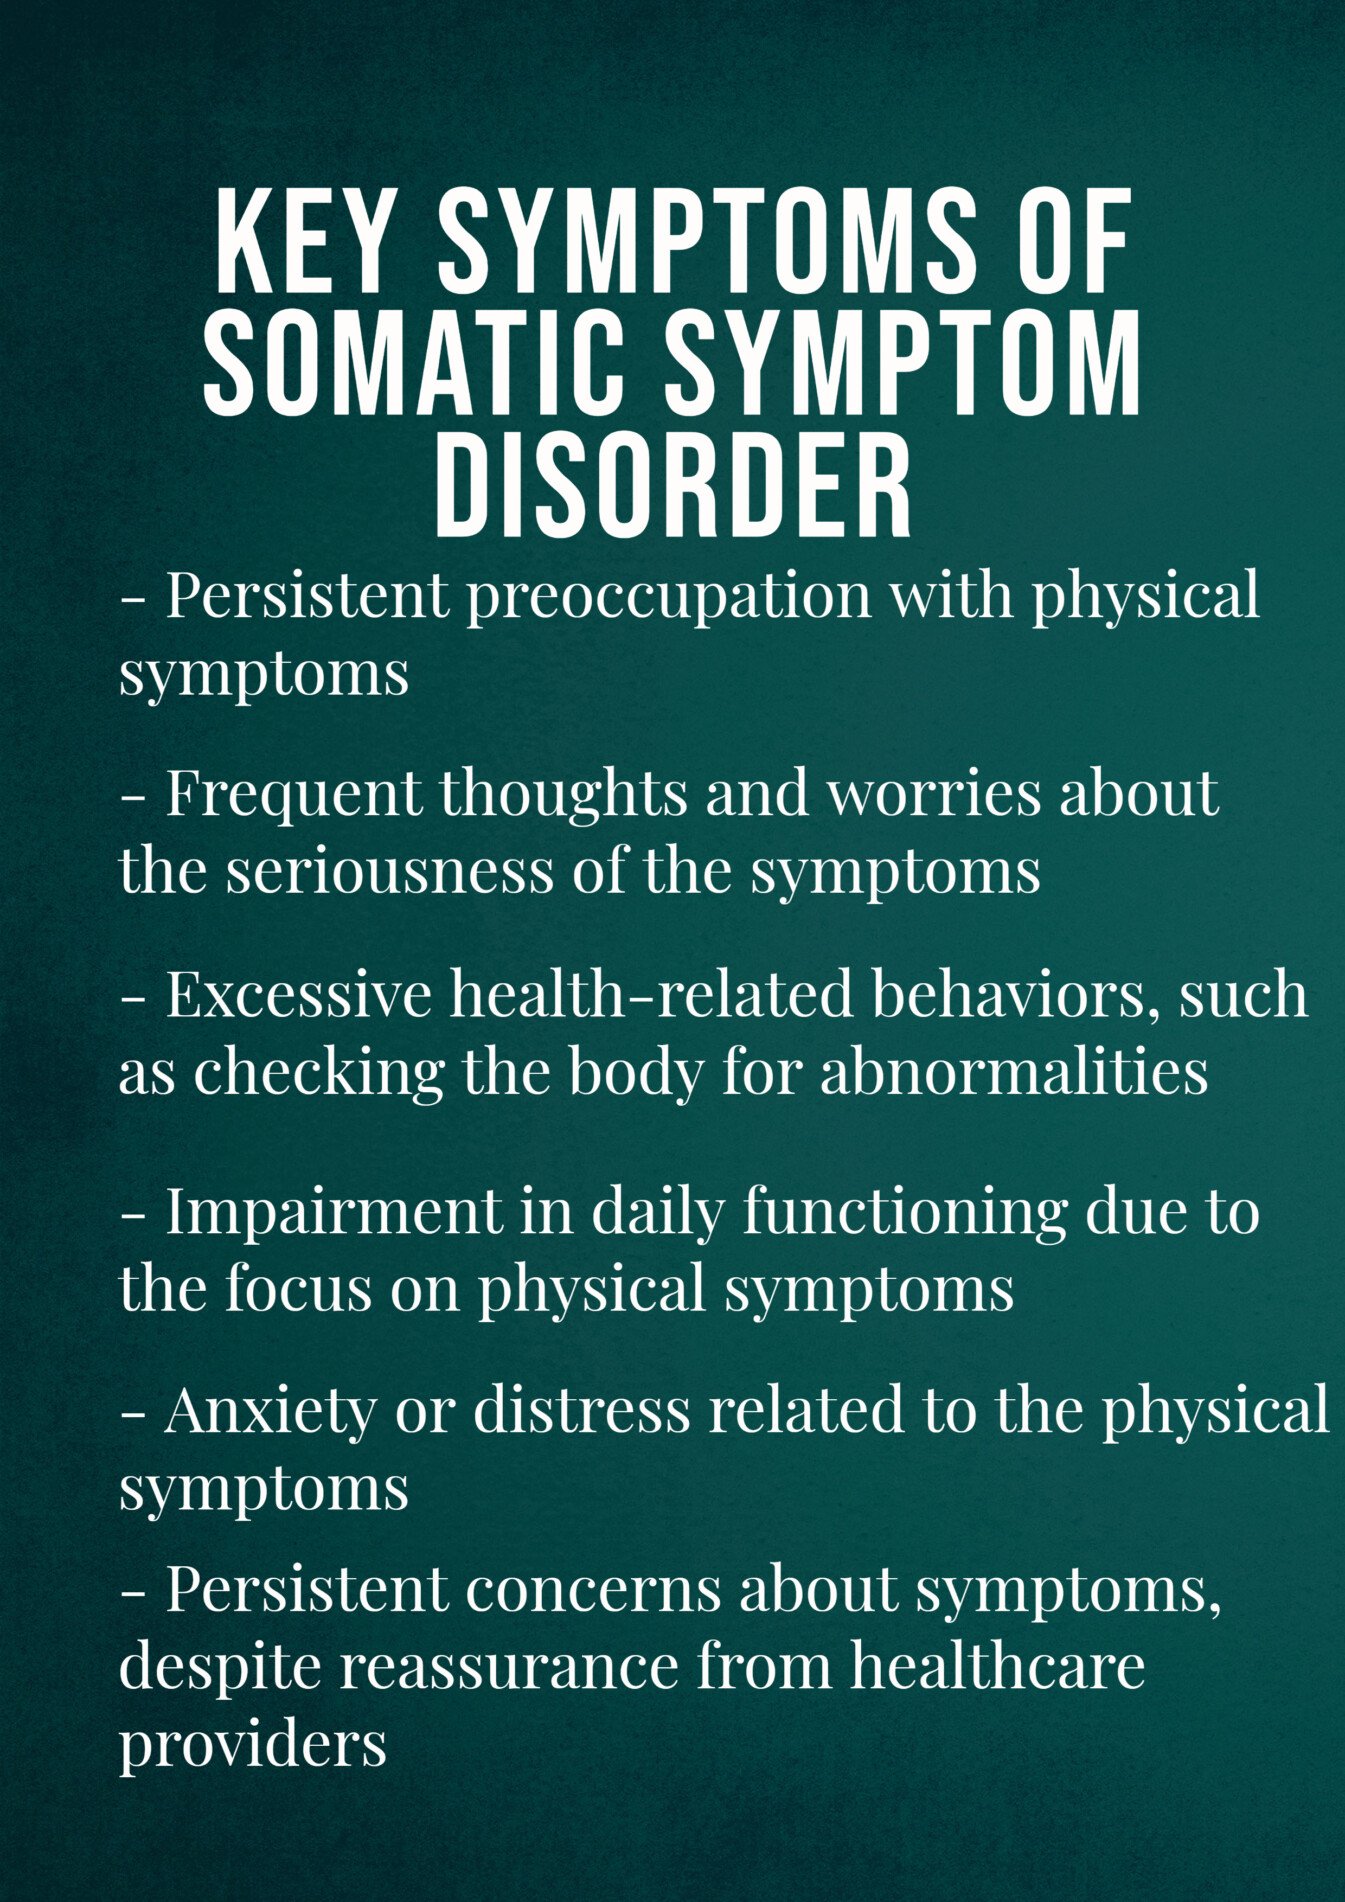 some of the key symptoms of somatic symptom disorder